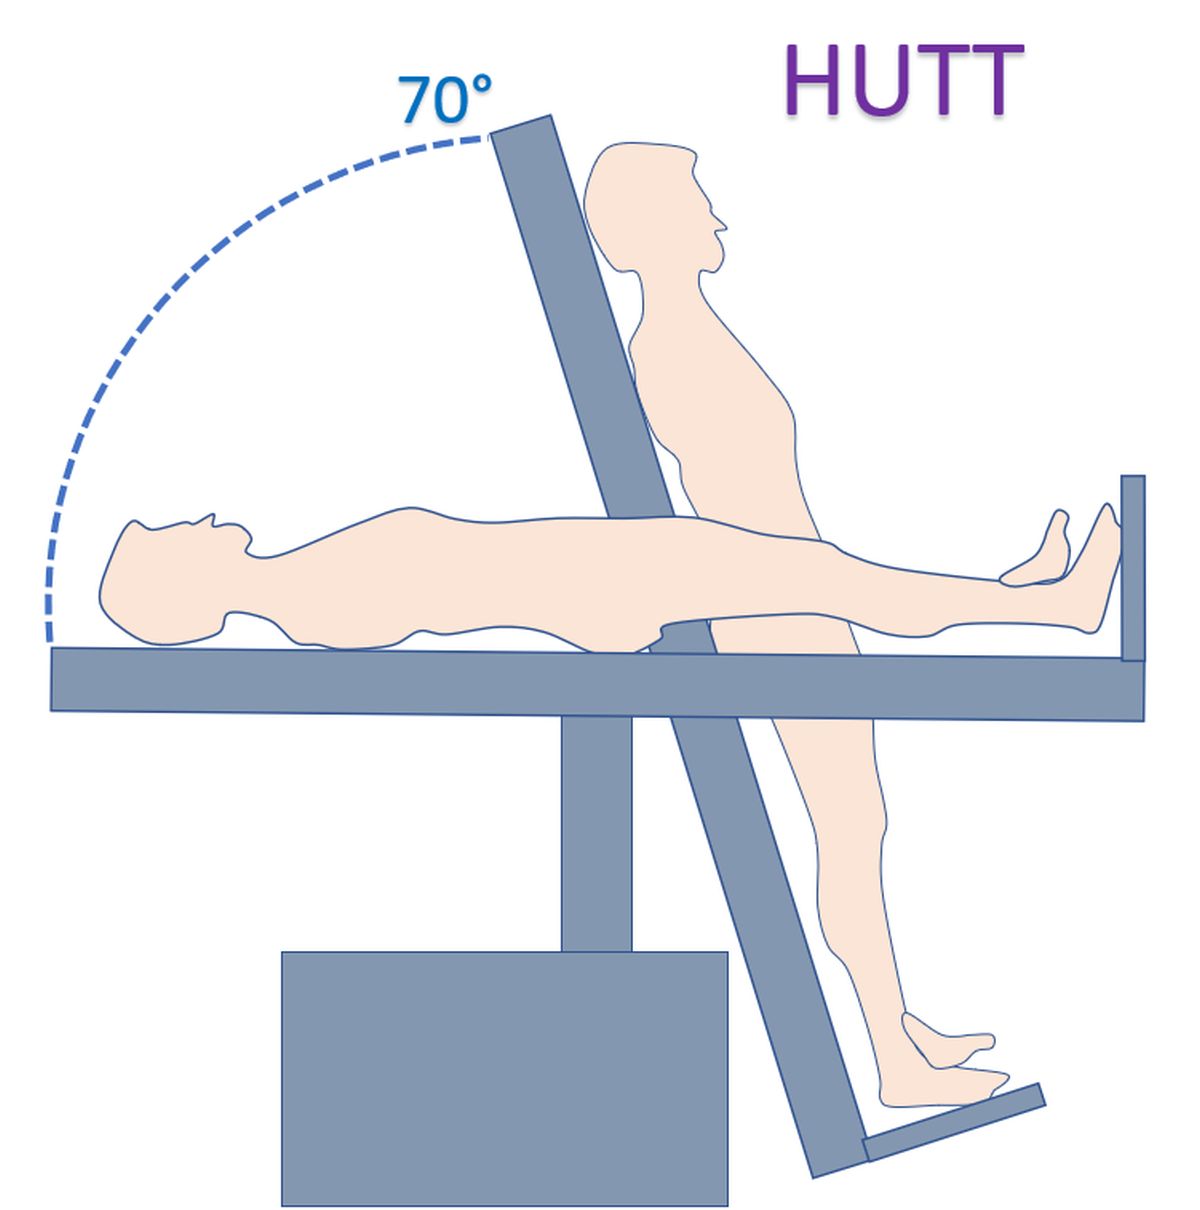 Study protocol for head-up tilt test (HUT).